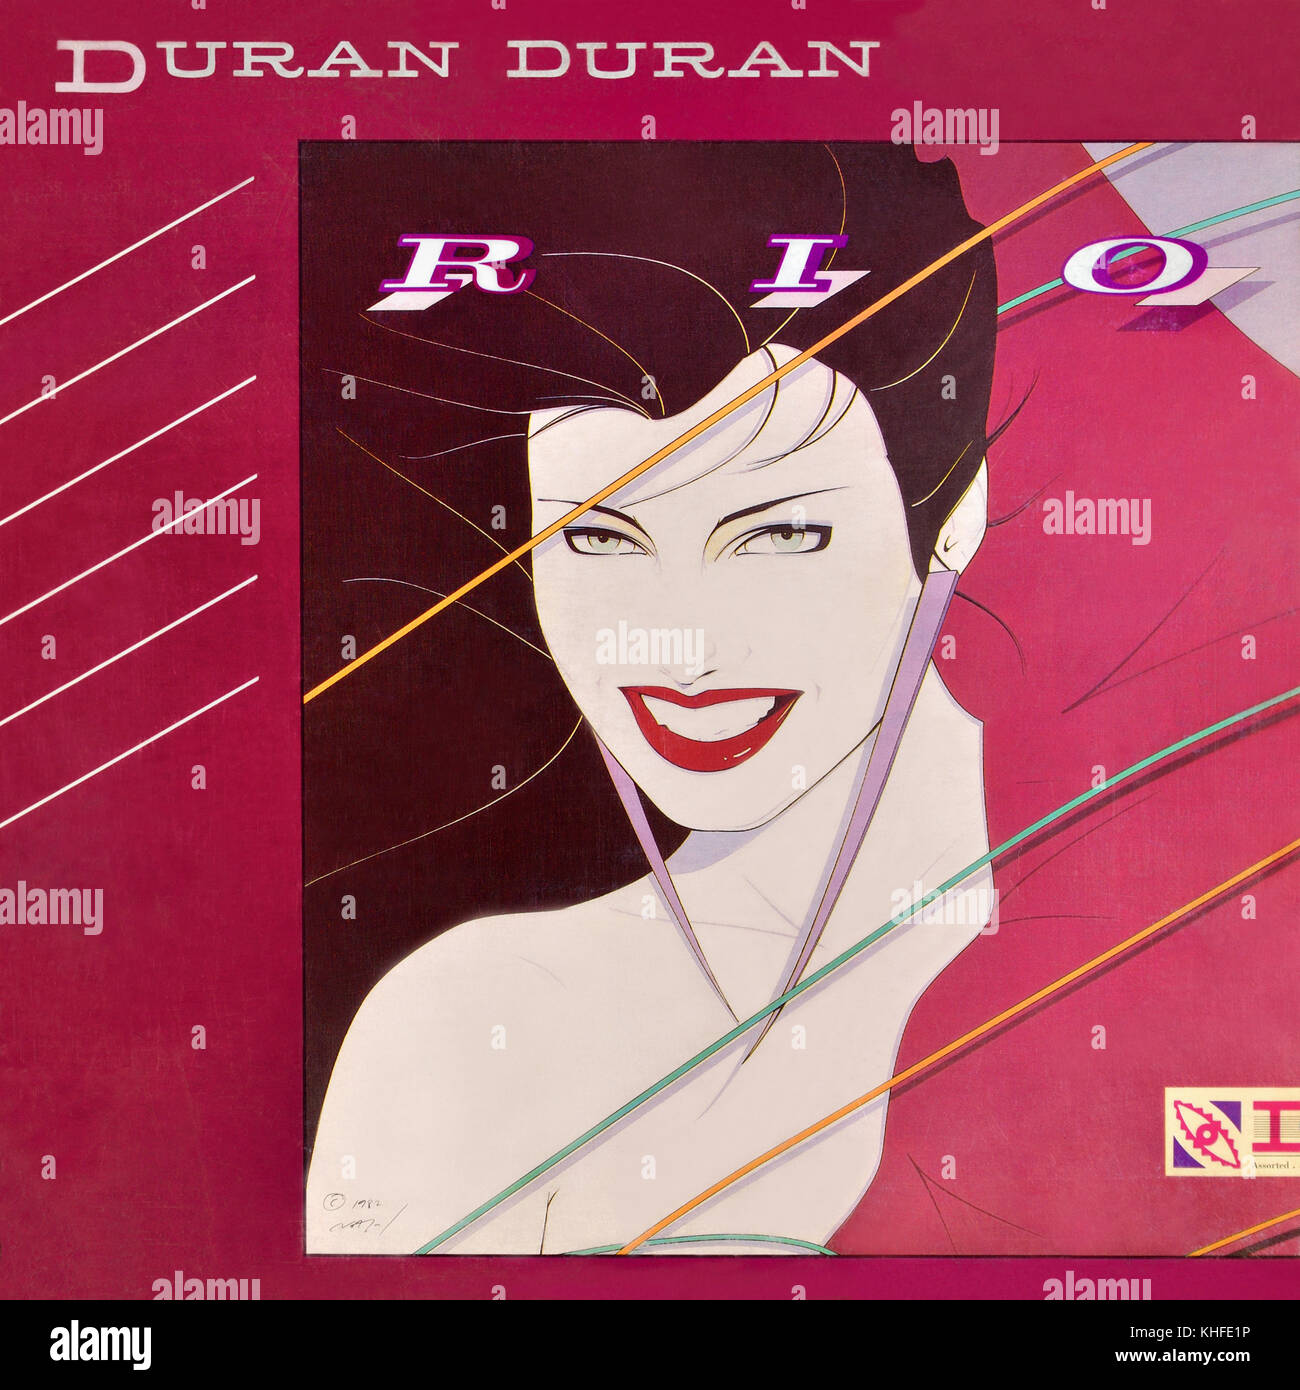 DURAN Duran - original Vinyl Album Cover - Rio - 1982 Stockfoto